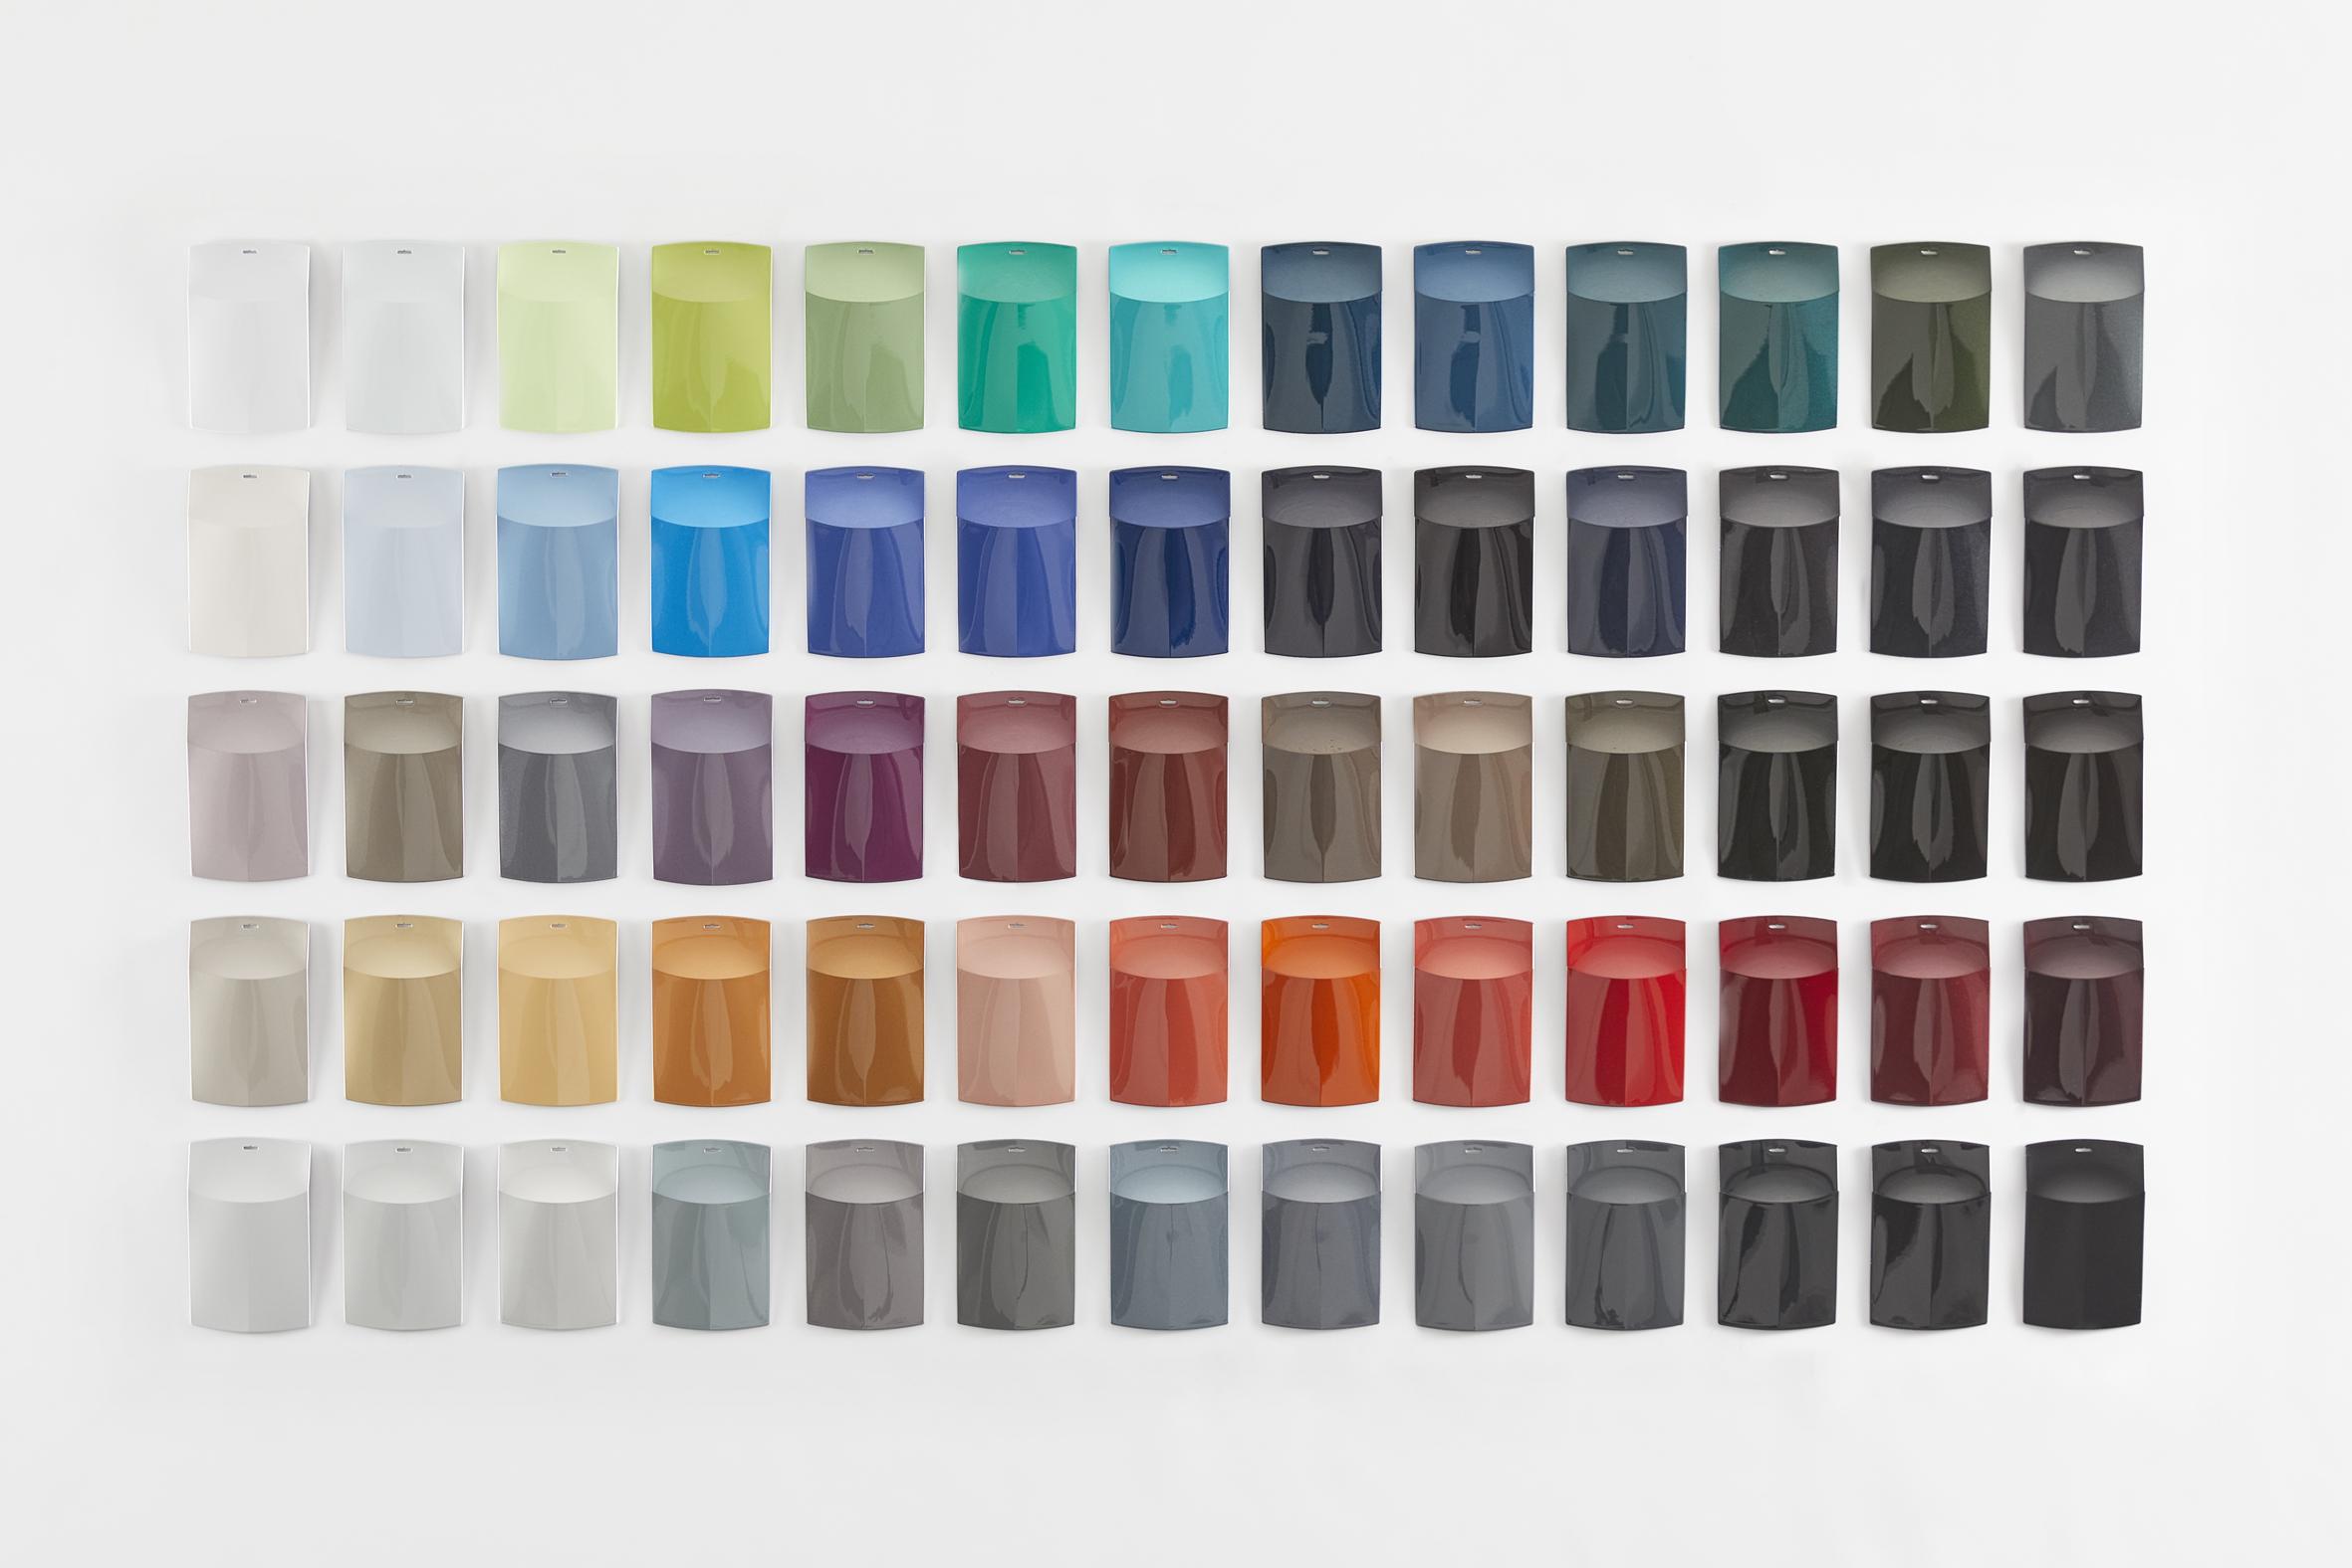 Sober Colors Dominate BASF Color Palette for 2022